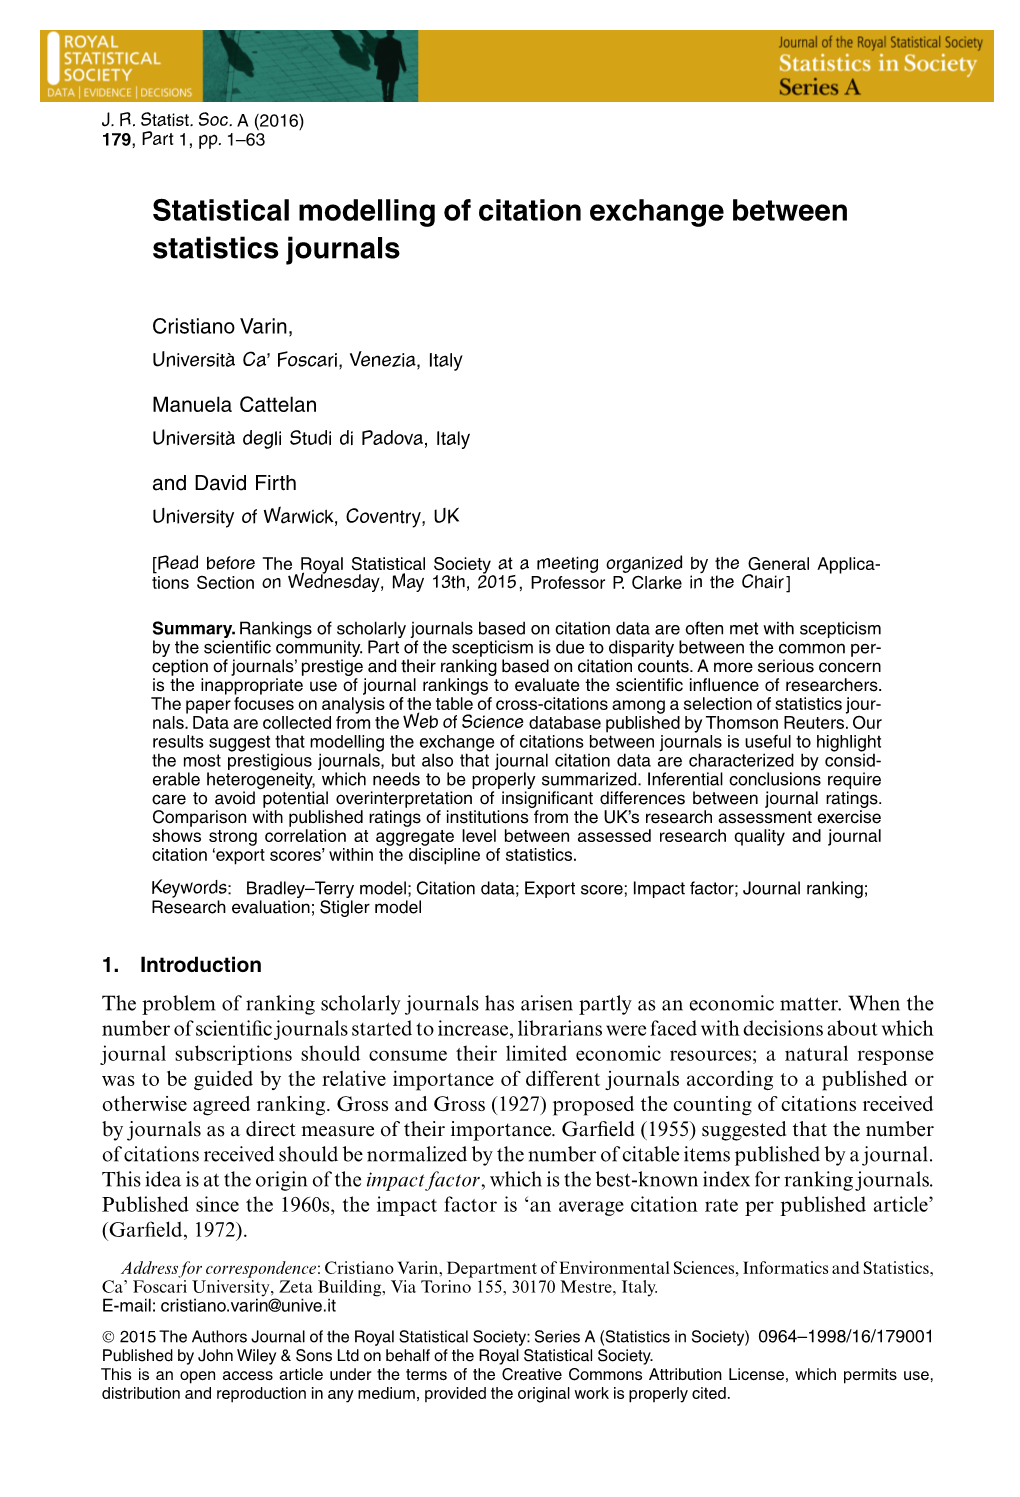 Statistical Modelling of Citation Exchange Between Statistics Journals